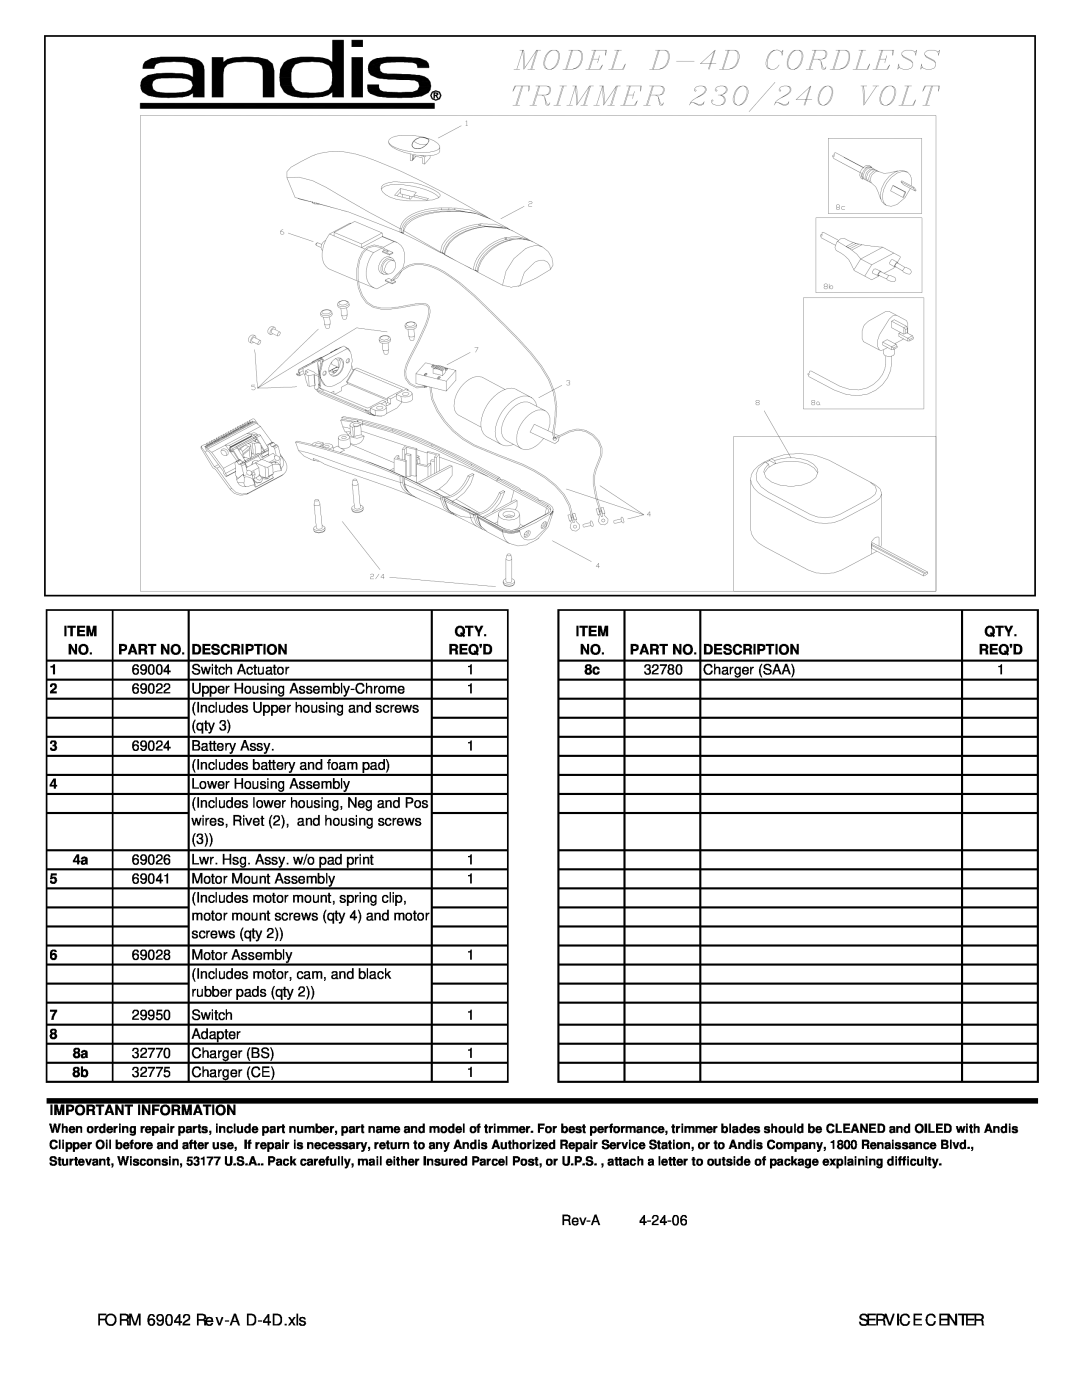 Andis Company manual FORM 69042 Rev-A D-4D.xls, Service Center, Description, Important Information, Qty Reqd 